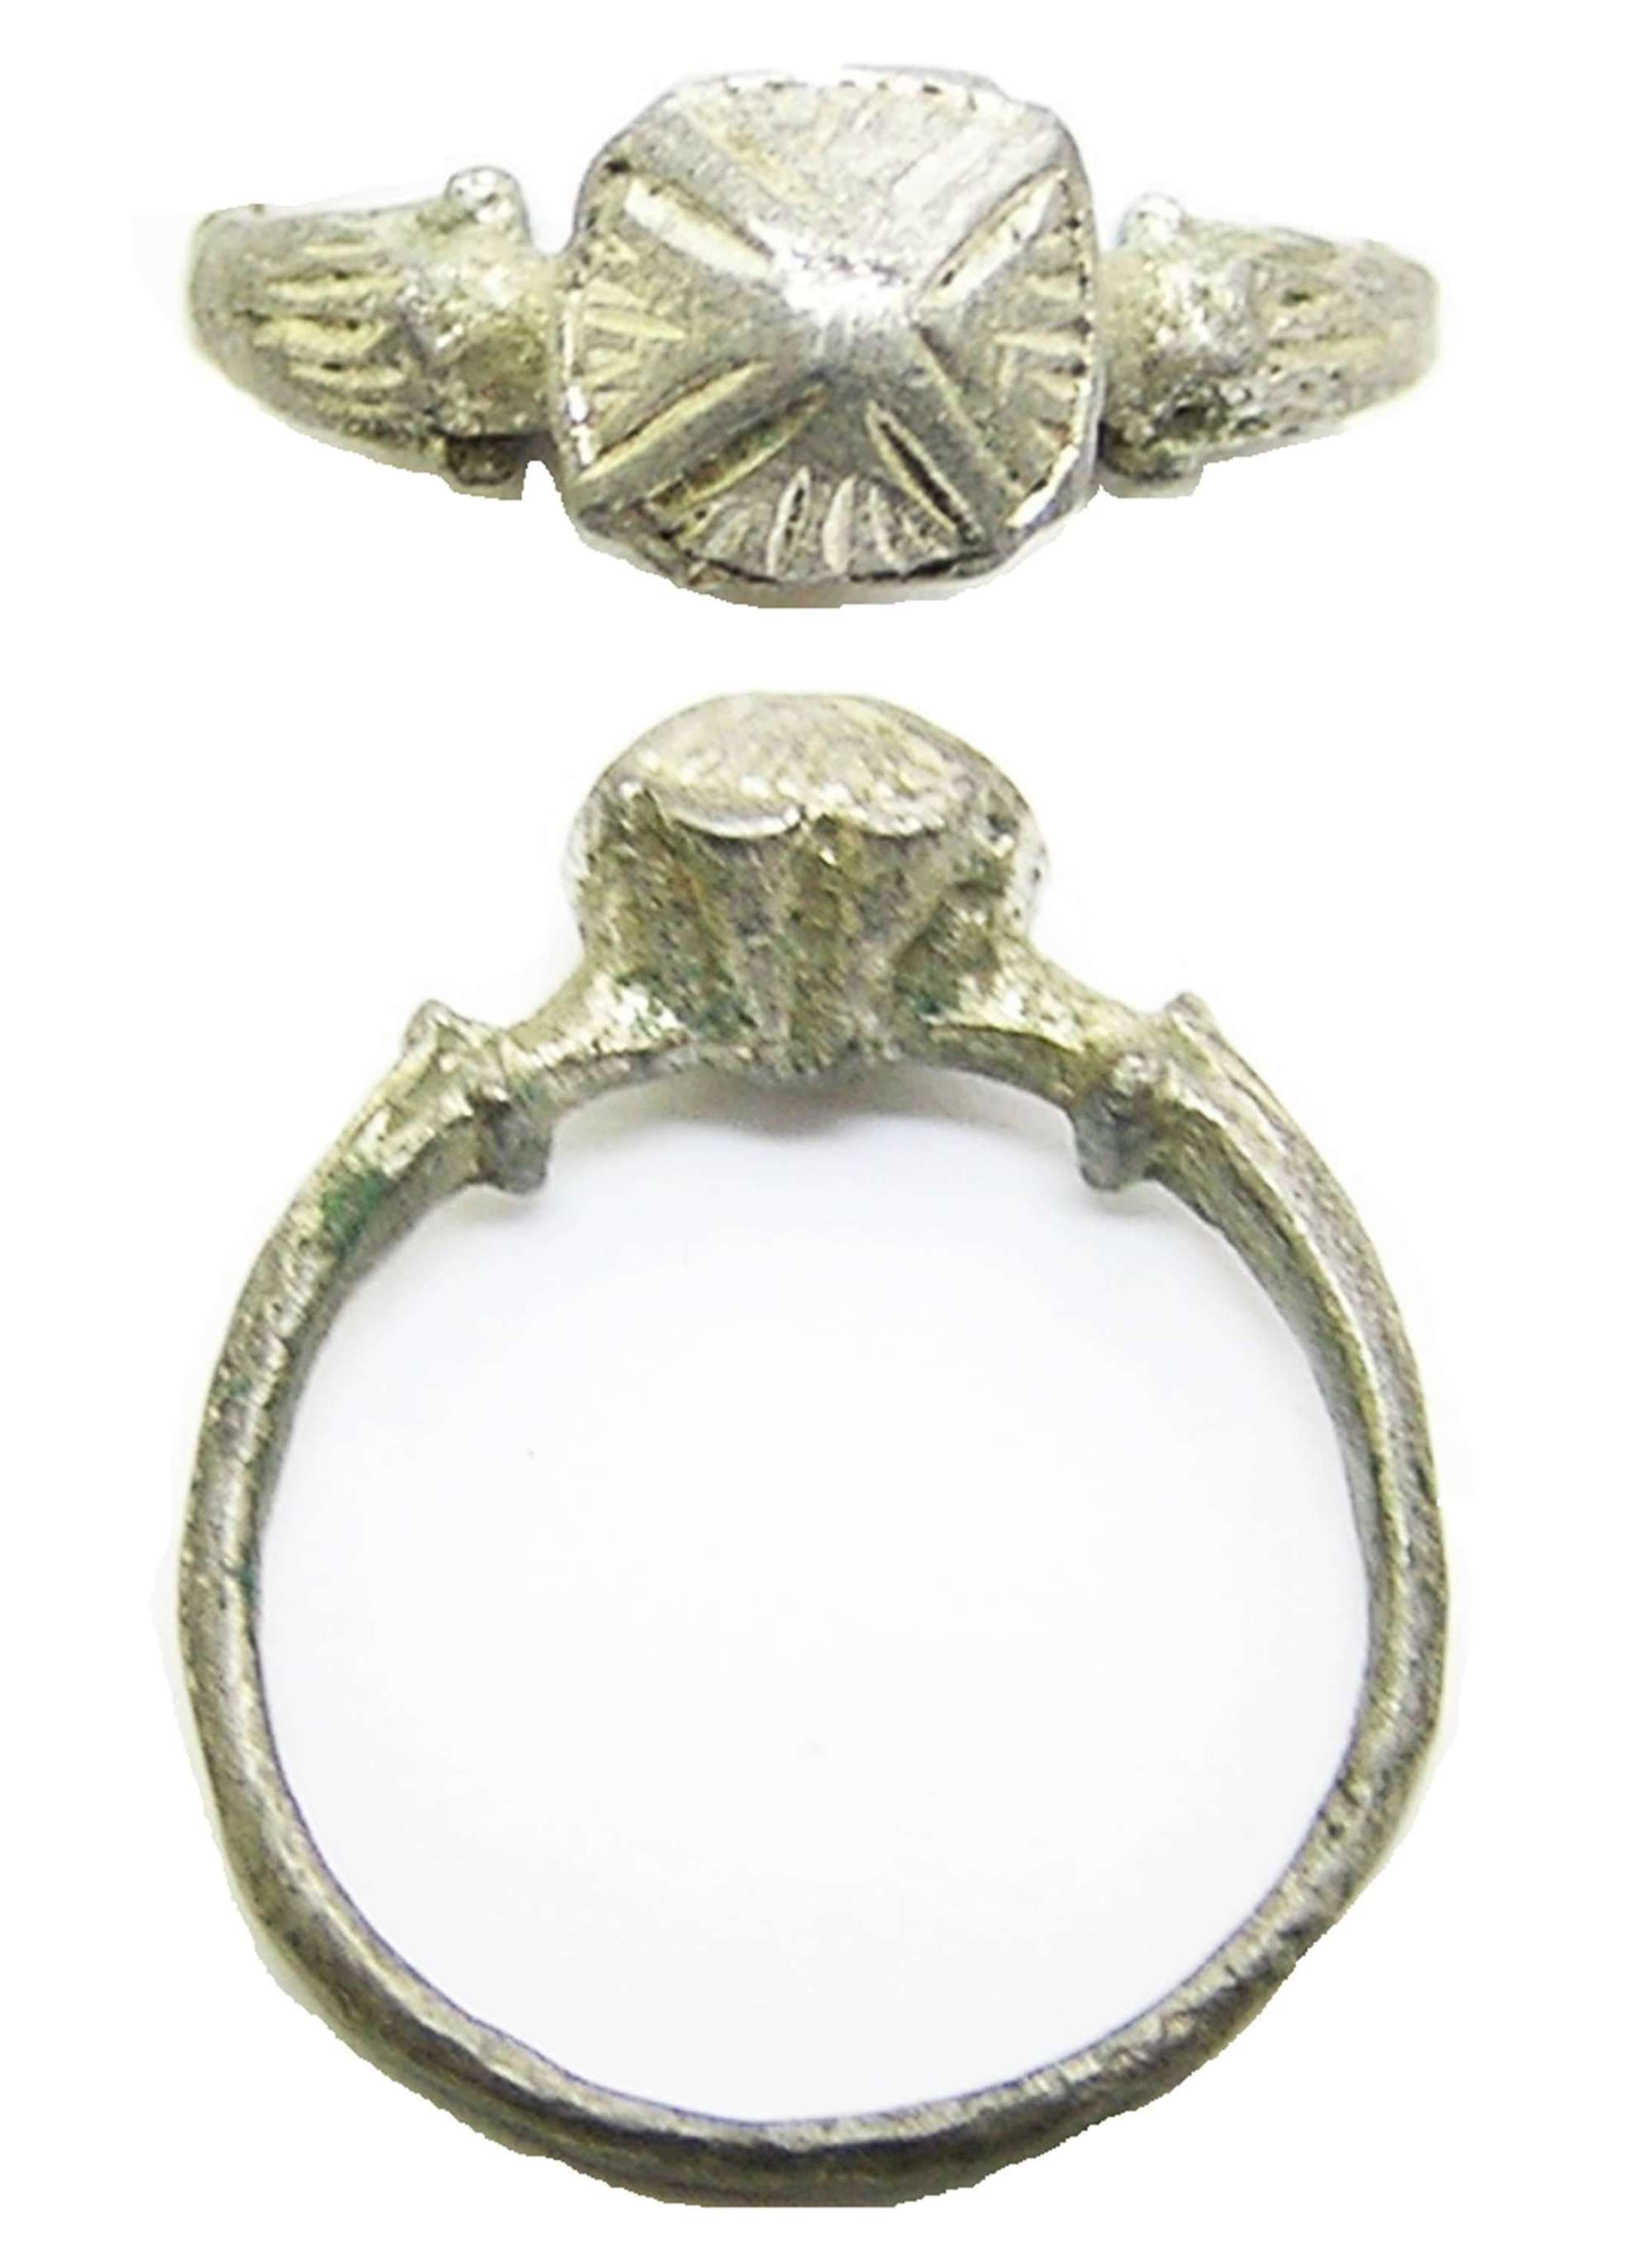 Renaissance silver finger ring diamond shaped bezel